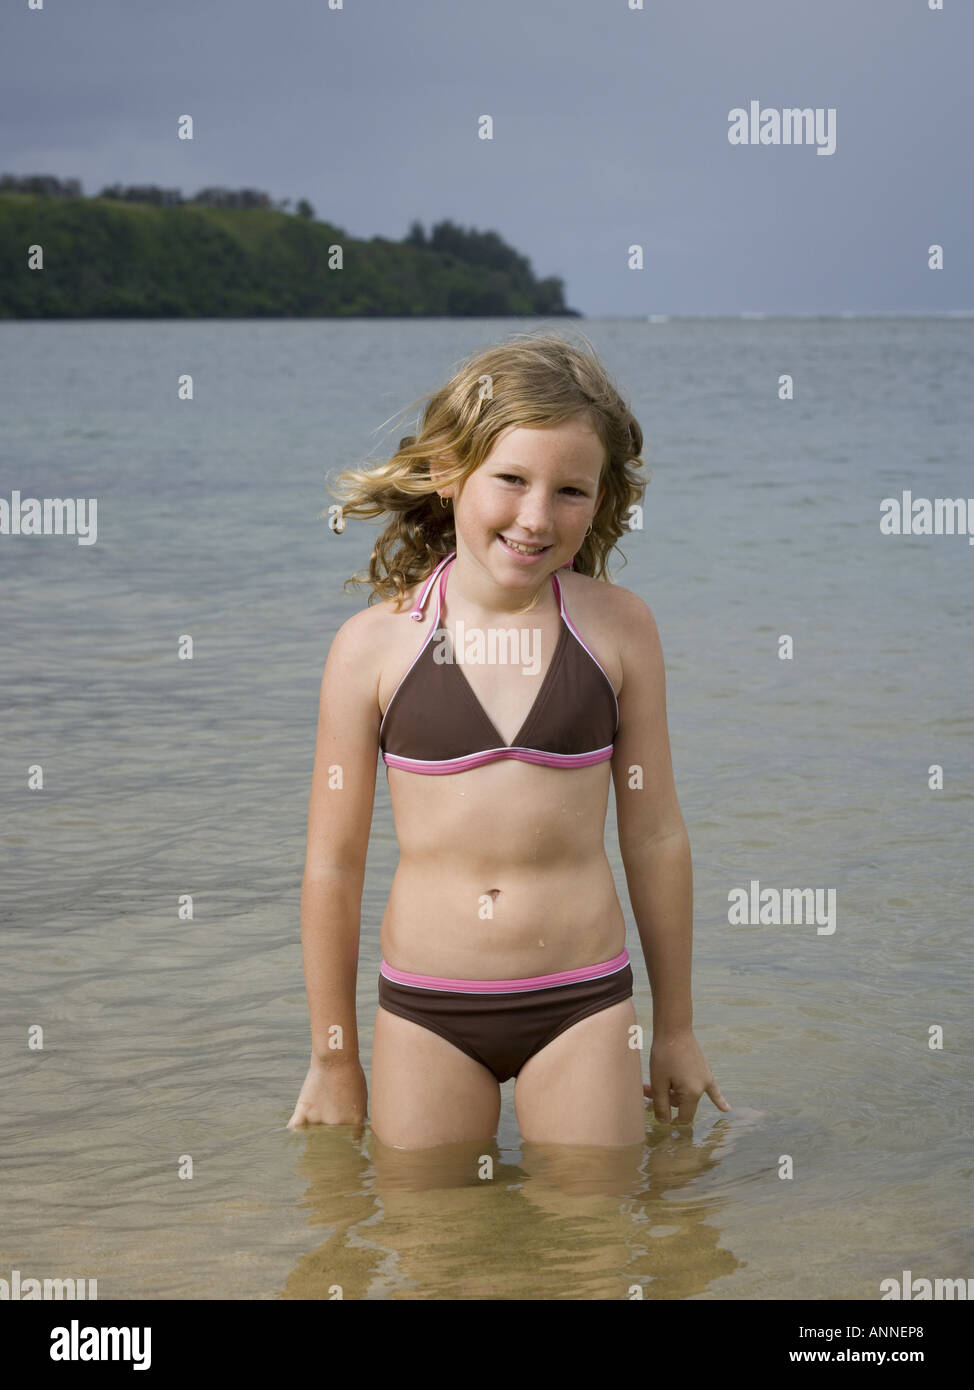 Niña de 11 años en bikini fotografías e imágenes de alta resolución - Alamy